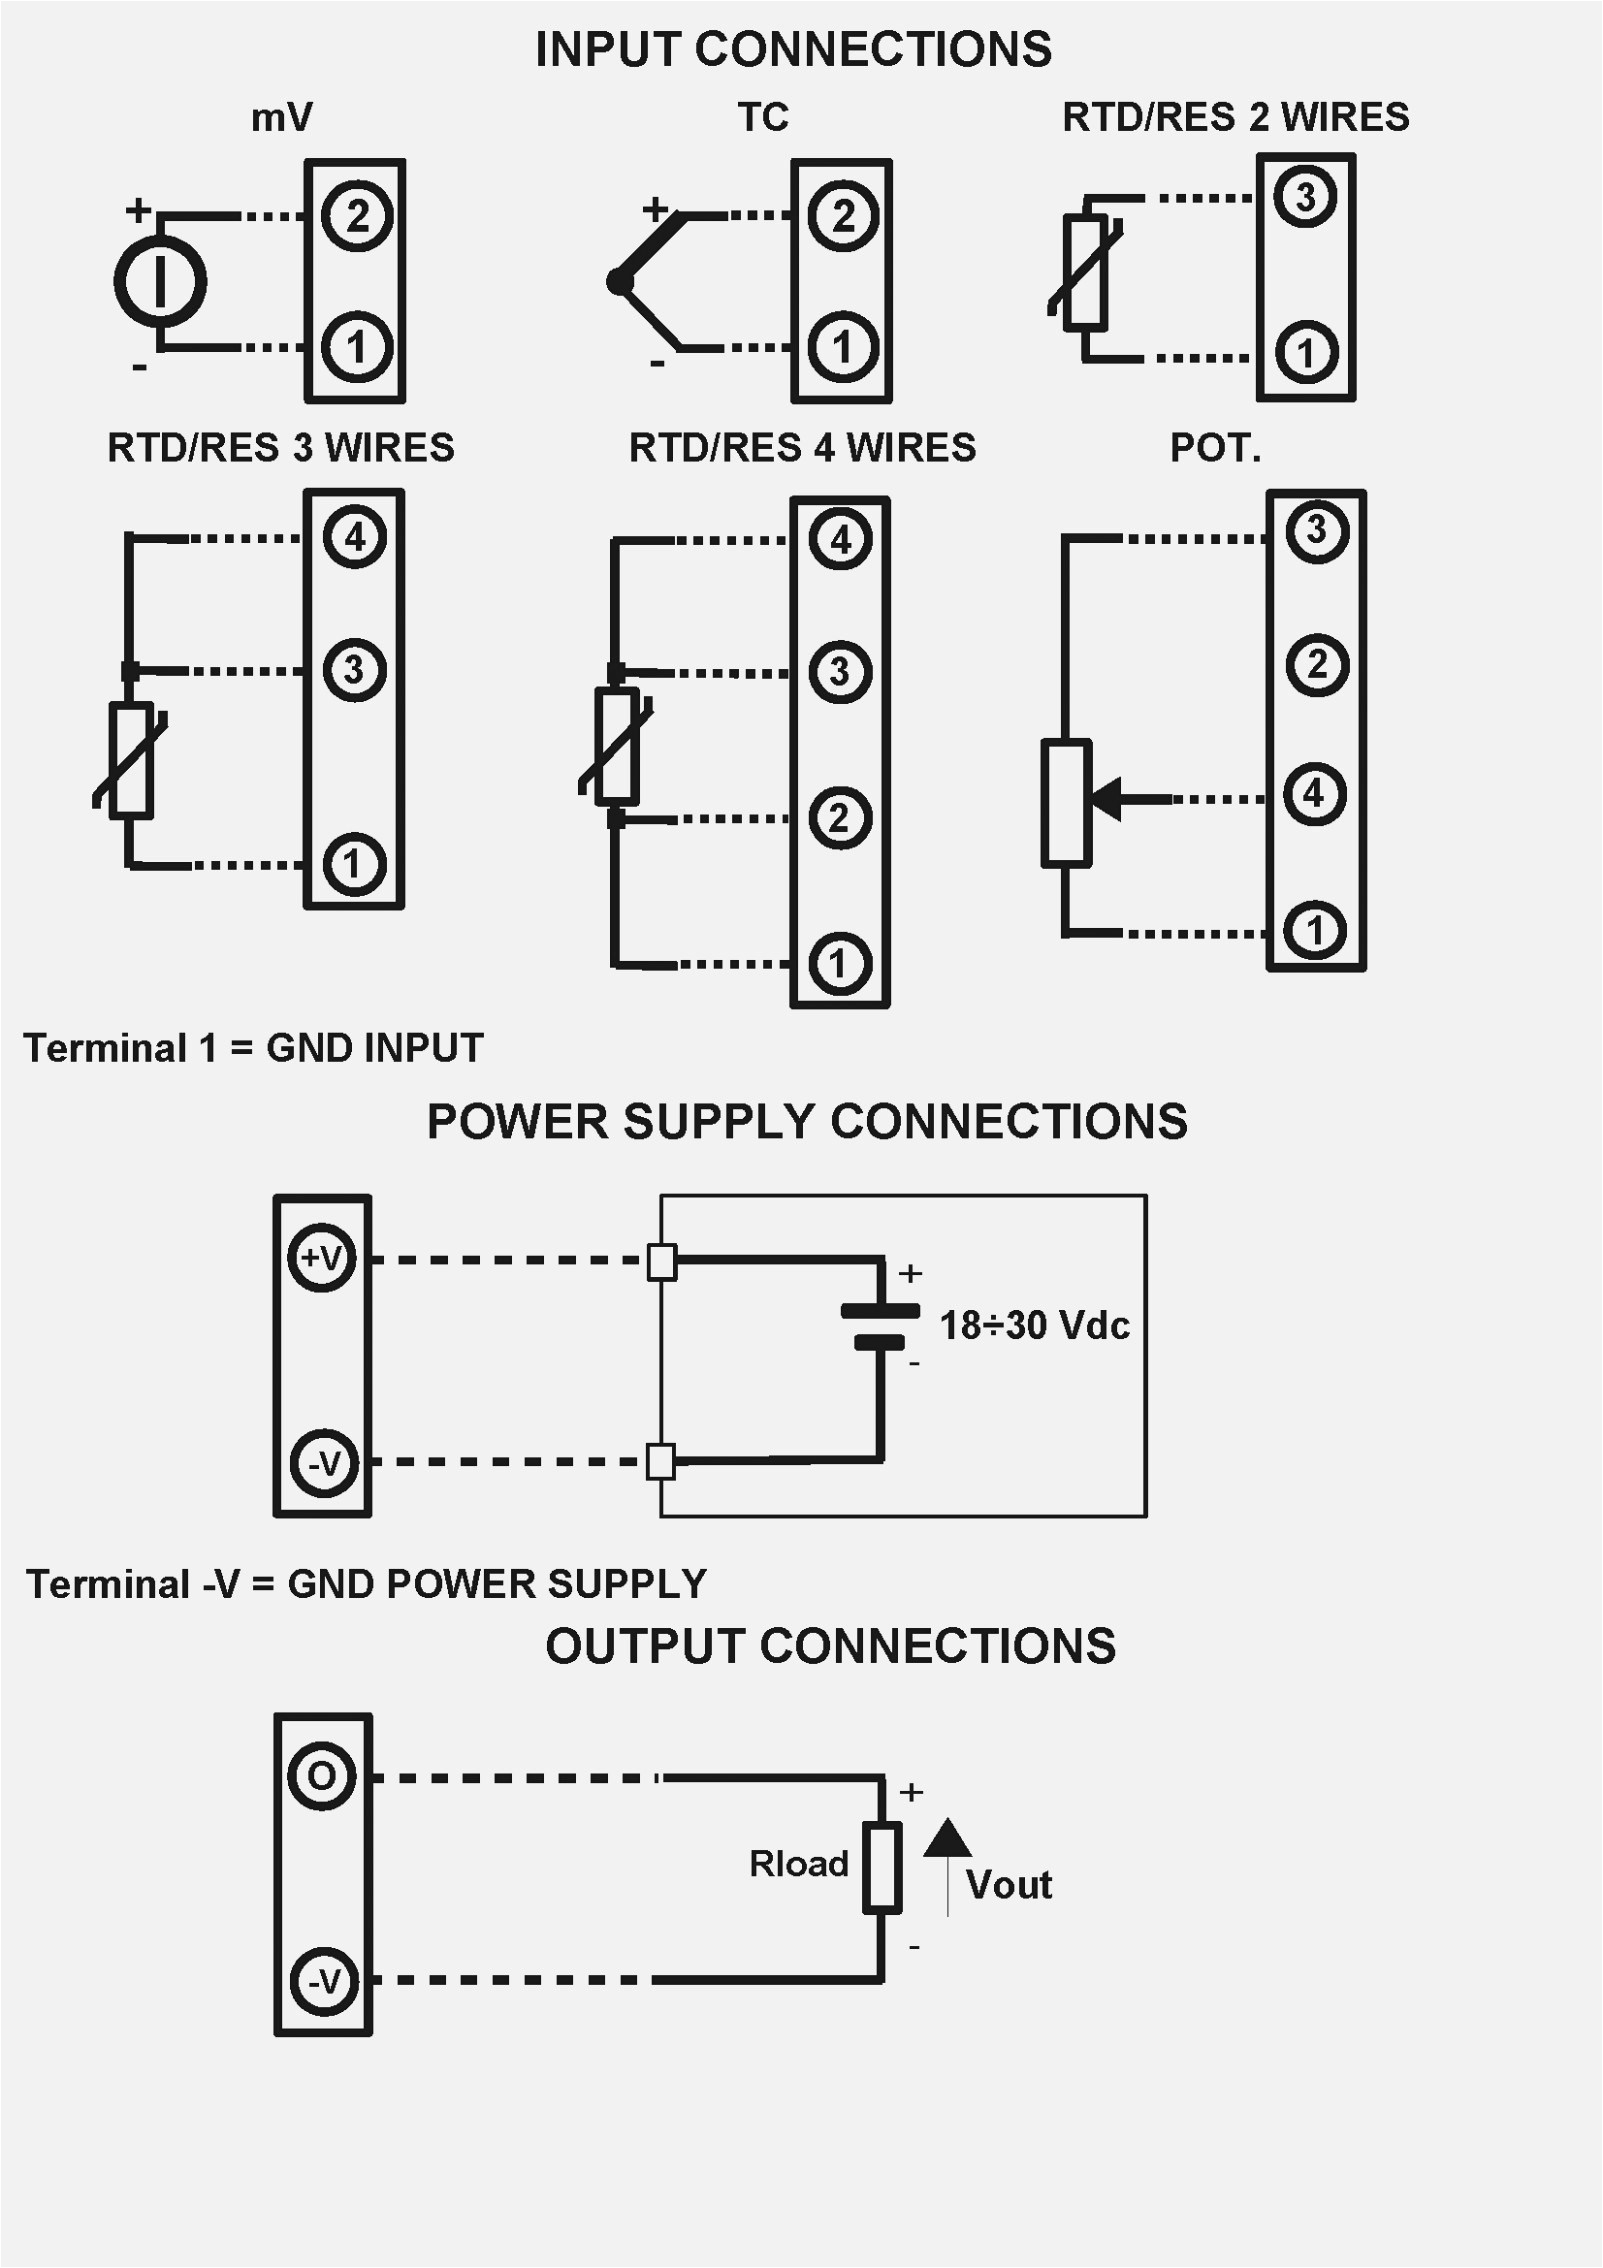 3 wire rtd diagram cad wiring diagram popular 3 wire rtd diagram cad